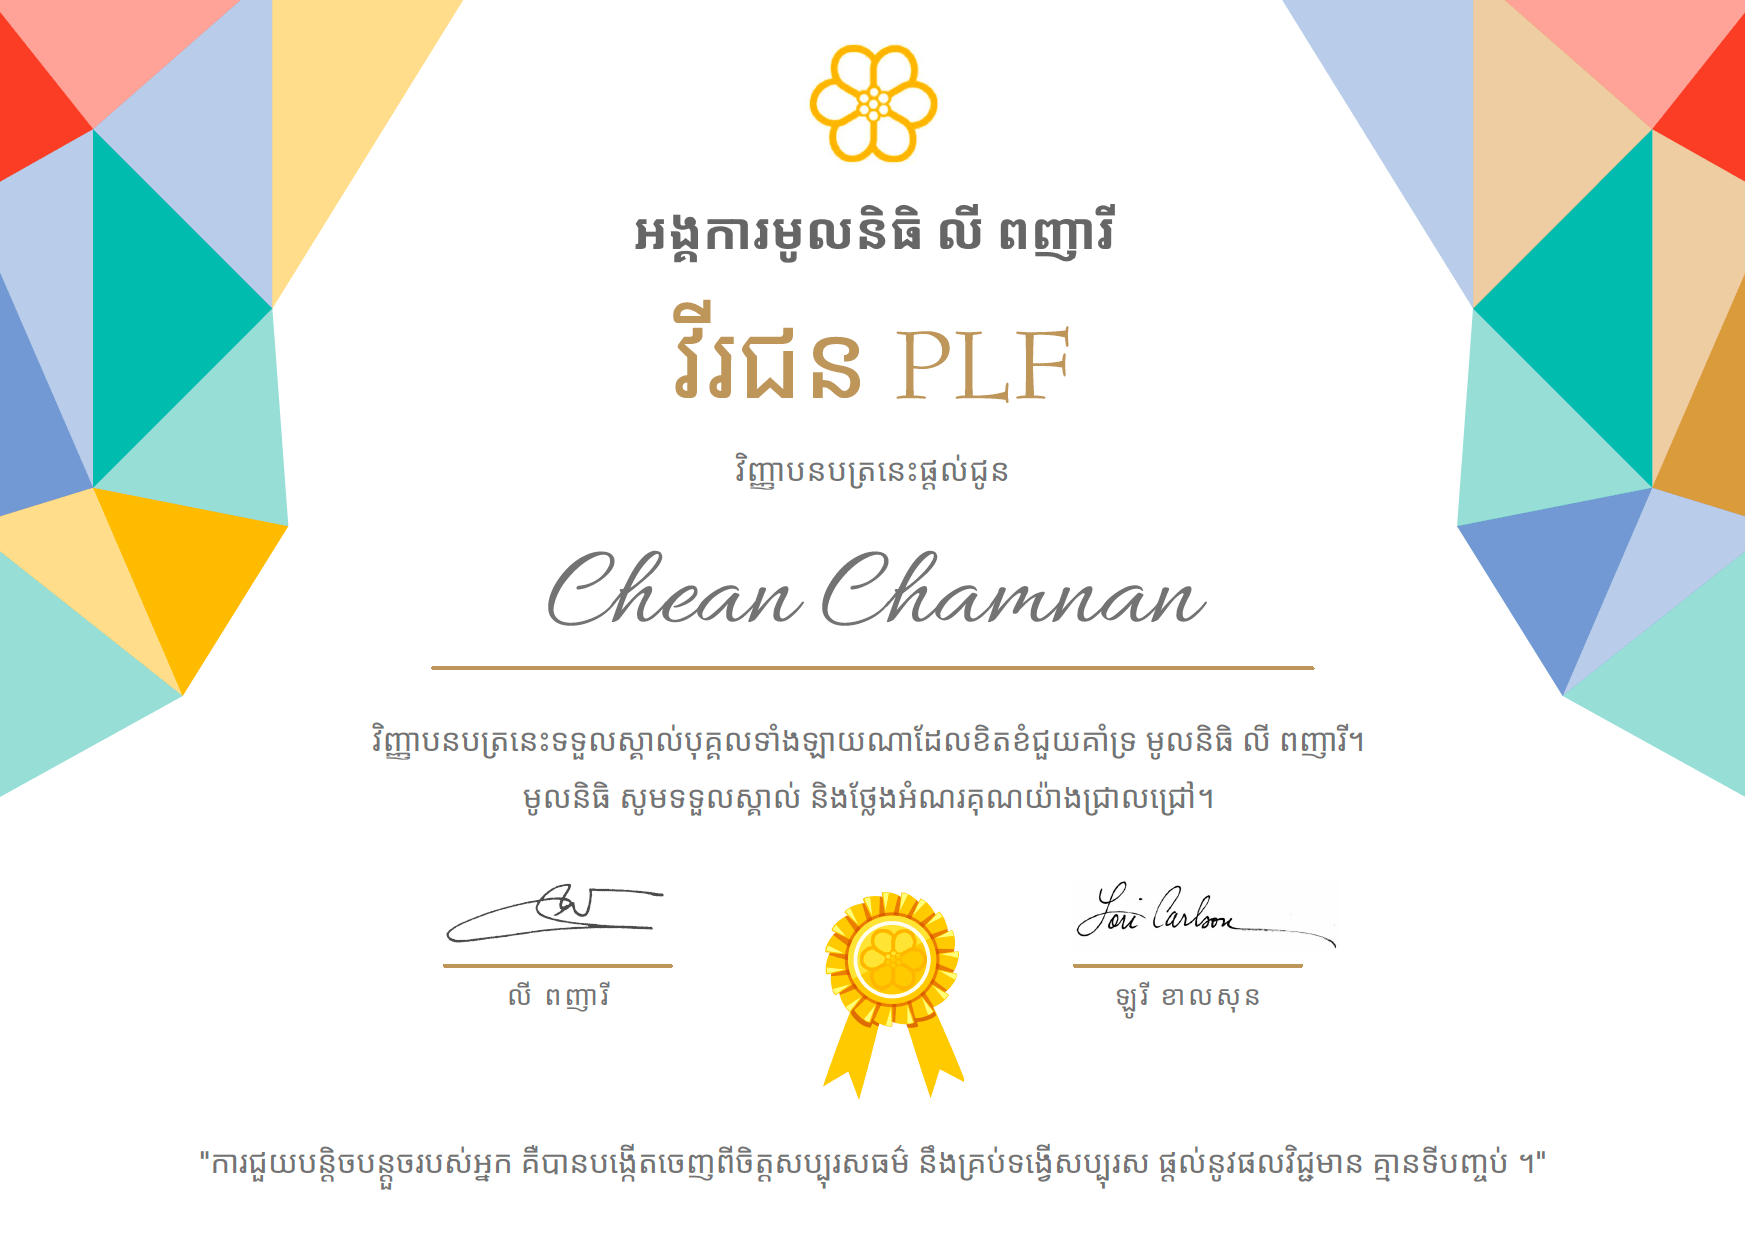 2 Chean Chamnan PLF Hero